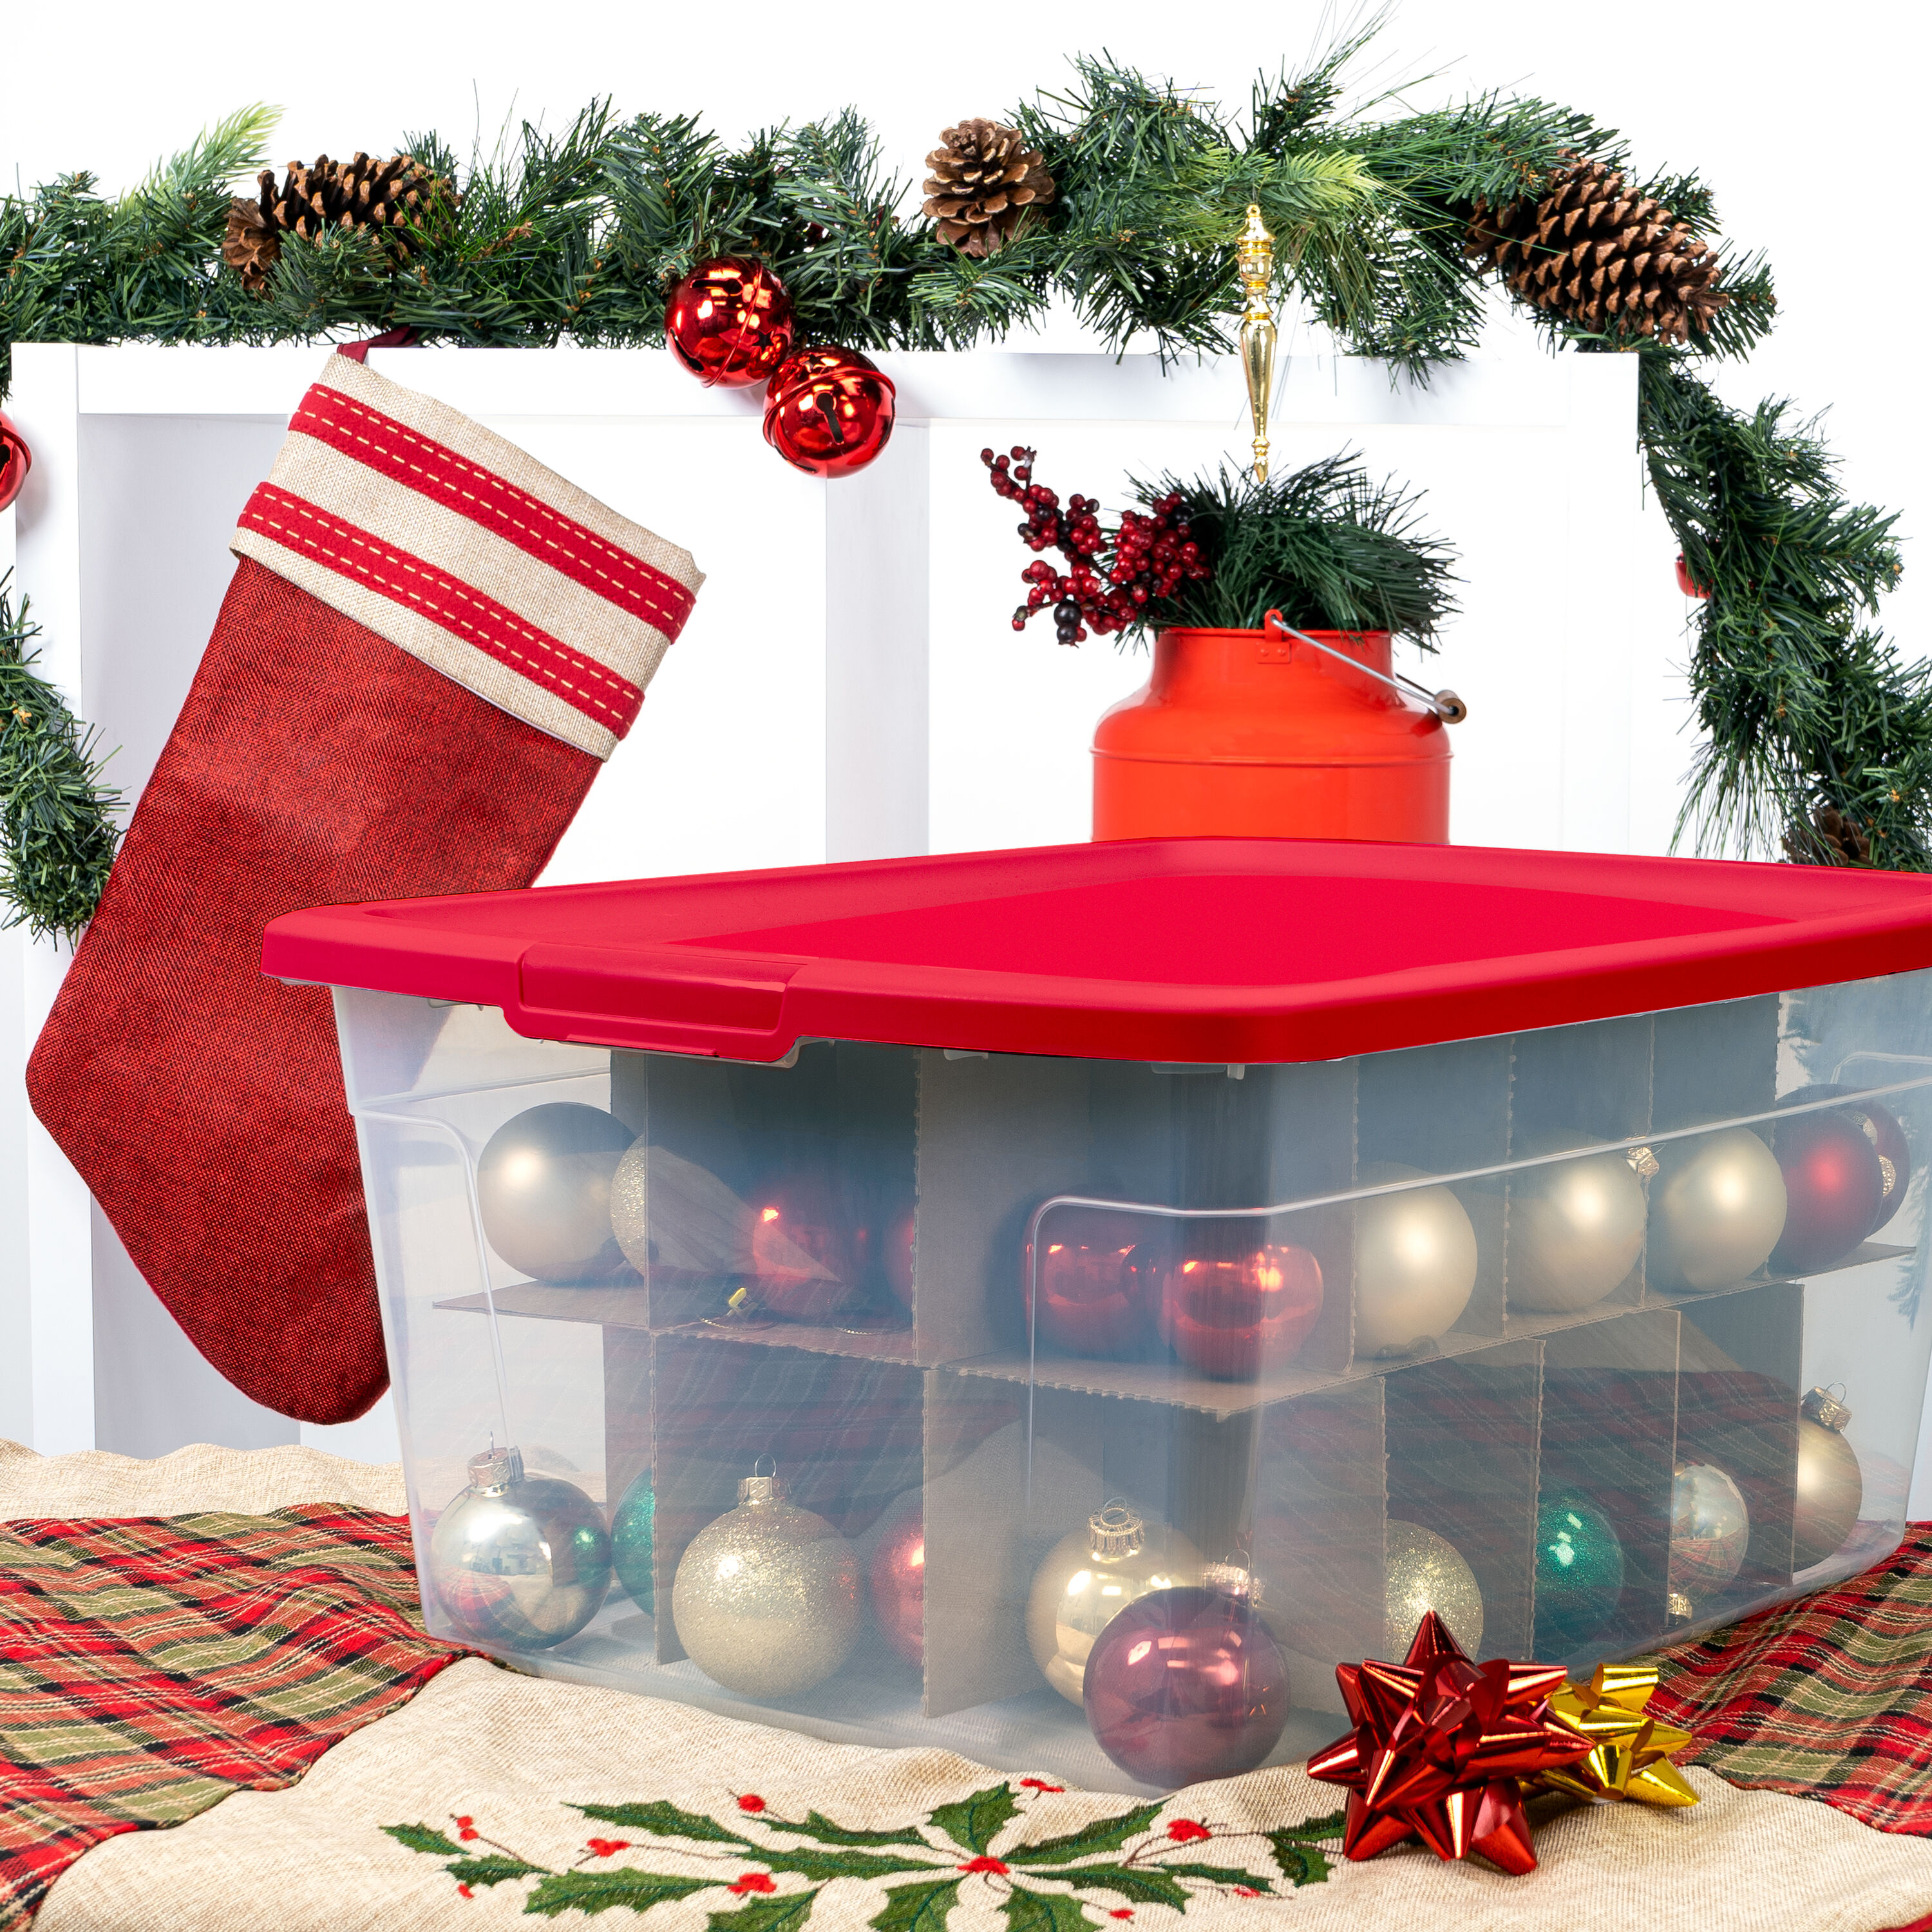 Abbylike 37 Quarts Christmas Storage Bin Holiday Seasonal Storage Totes  with Lids Red Green Christmas Ornament Storage Containers for Christmas  Home